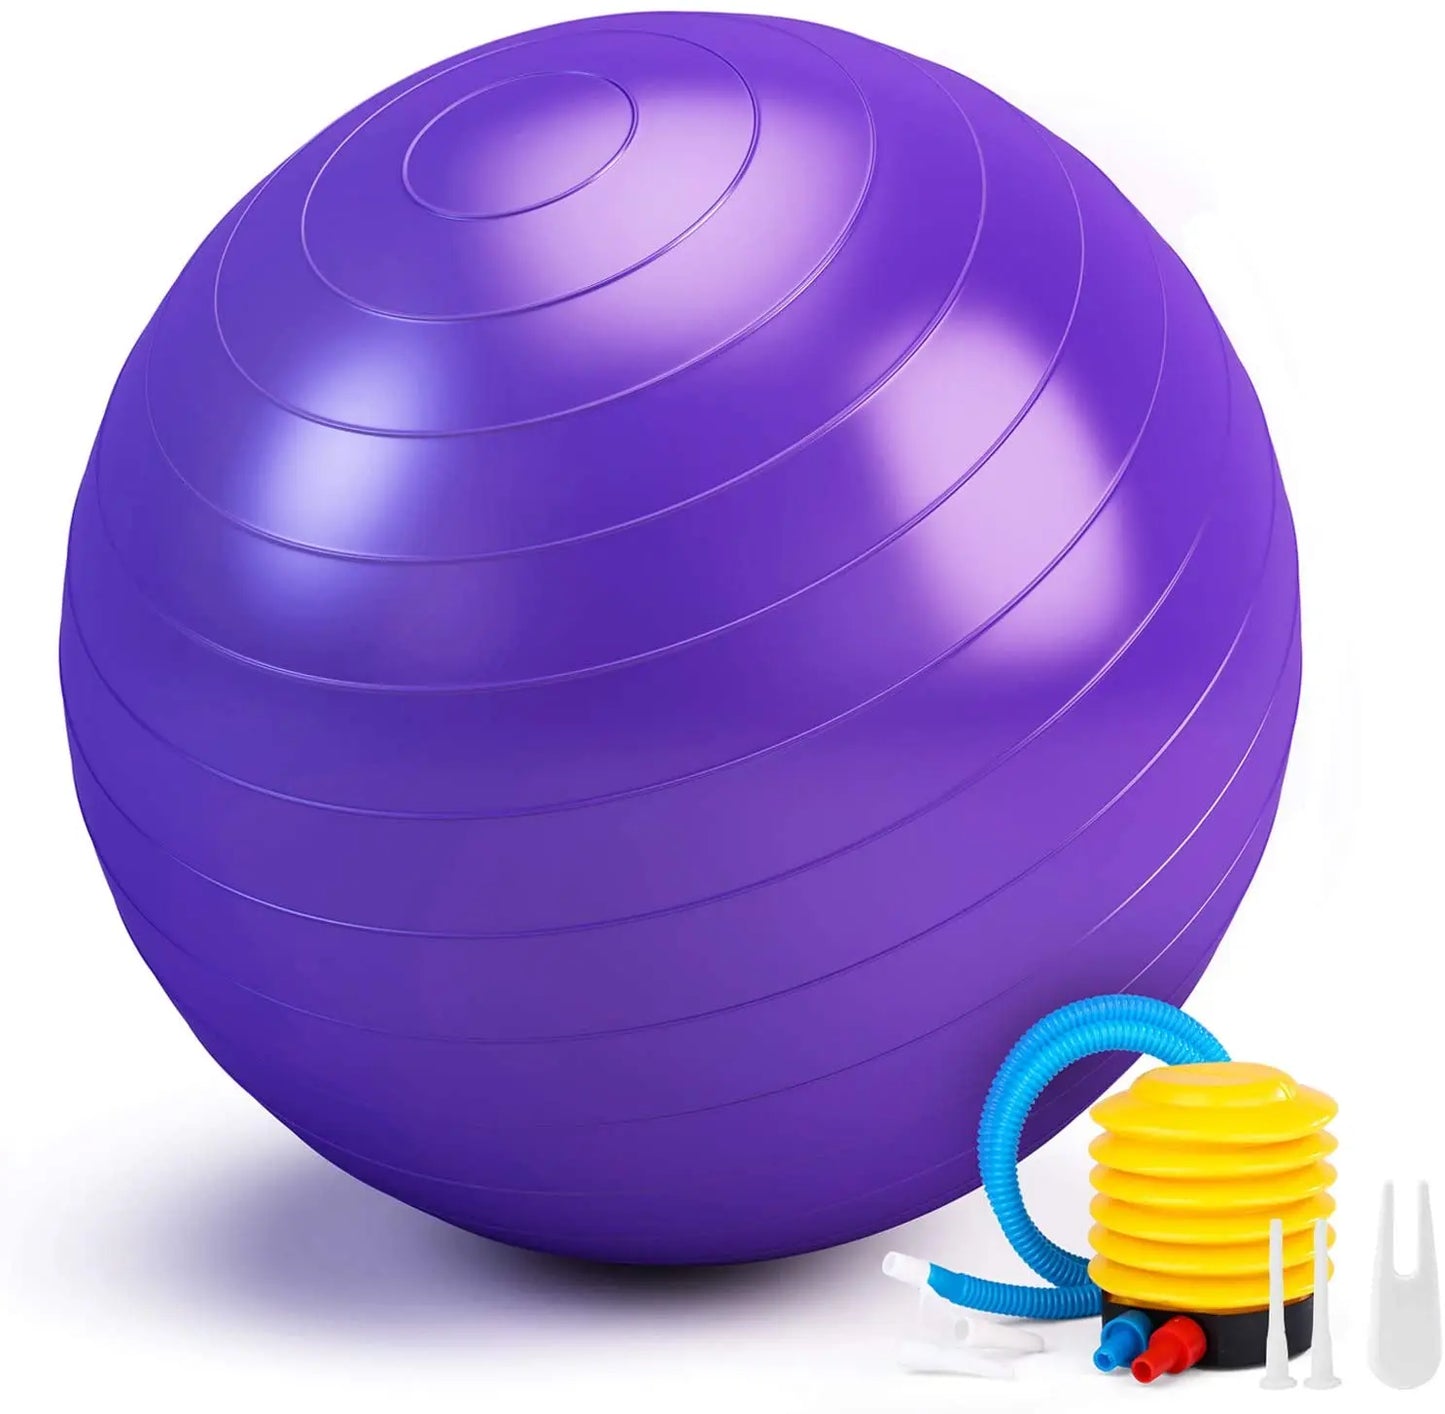 Gymnastic Massage Exercise Ball